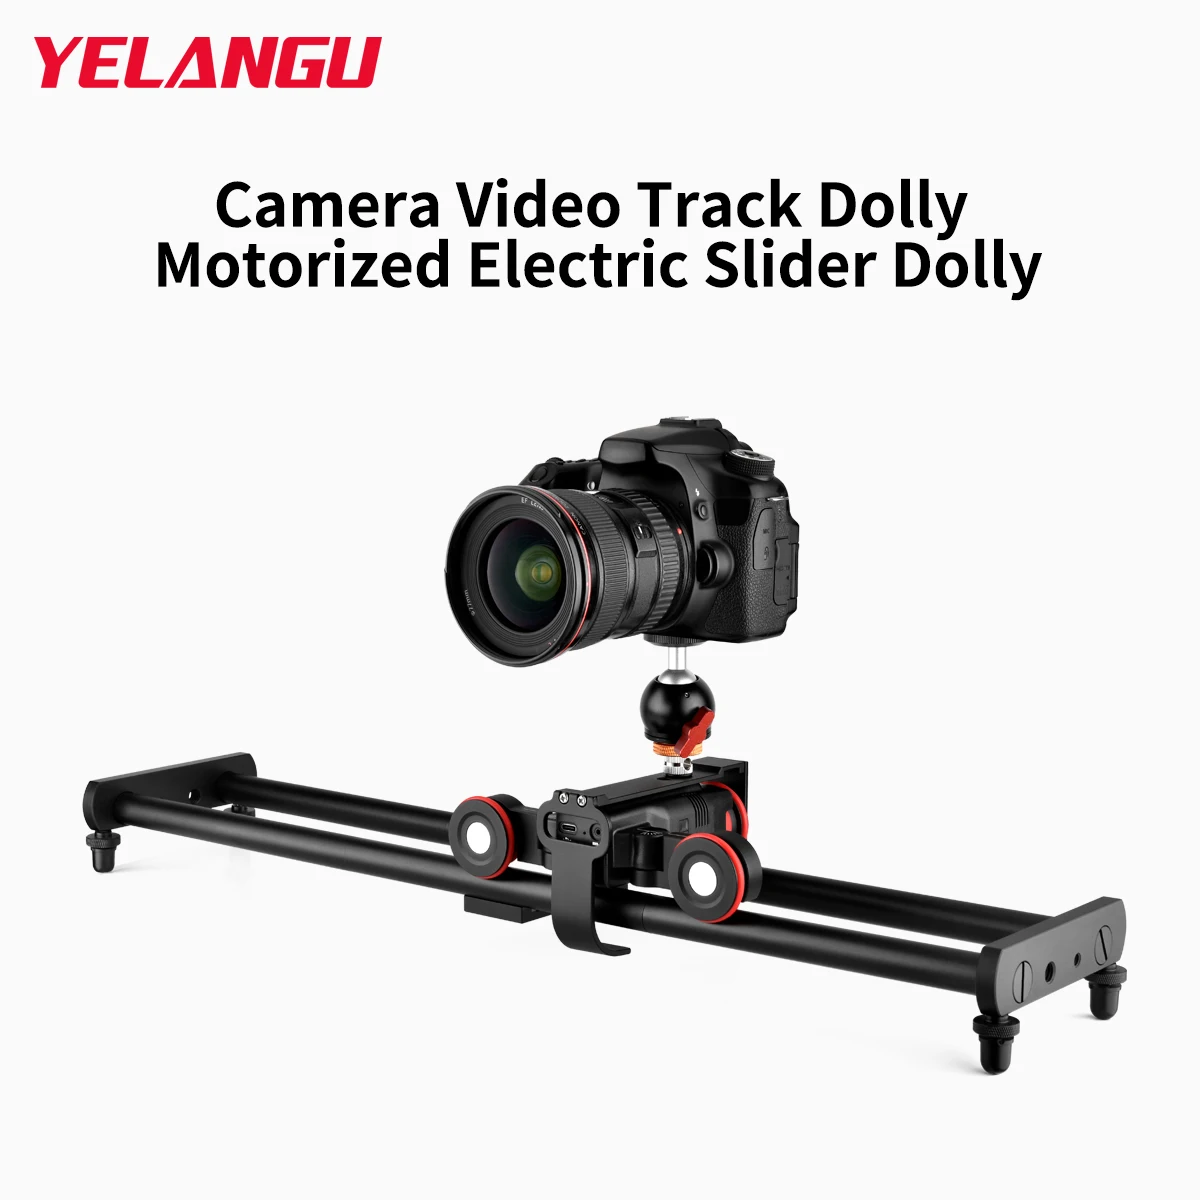 YELANGU Professional Motozied Carbon Fiber Camera Video Autodolly Scale Indication Electric Motor Track Slider for DSLR Camera